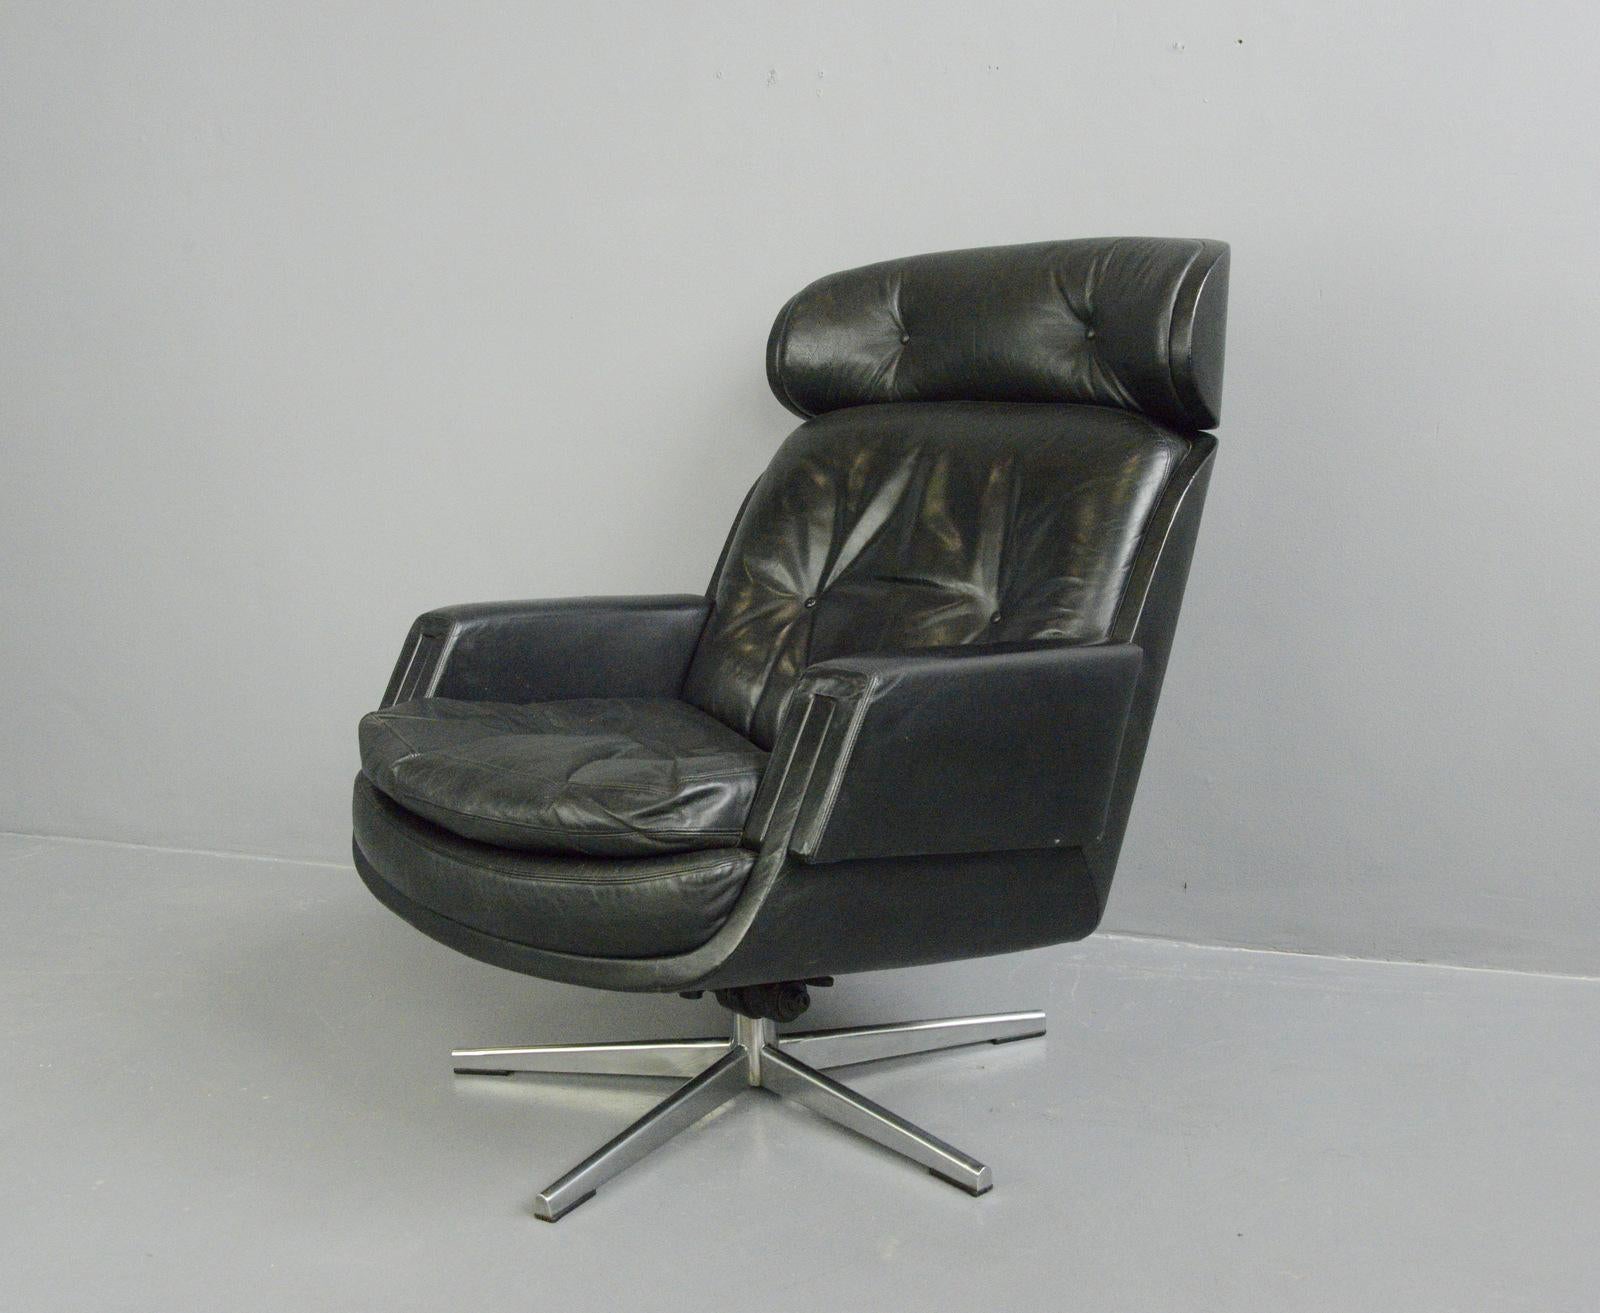 Finnish Midcentury Lounge Chair by Kurt Hvitsjö for Isku, circa 1960s